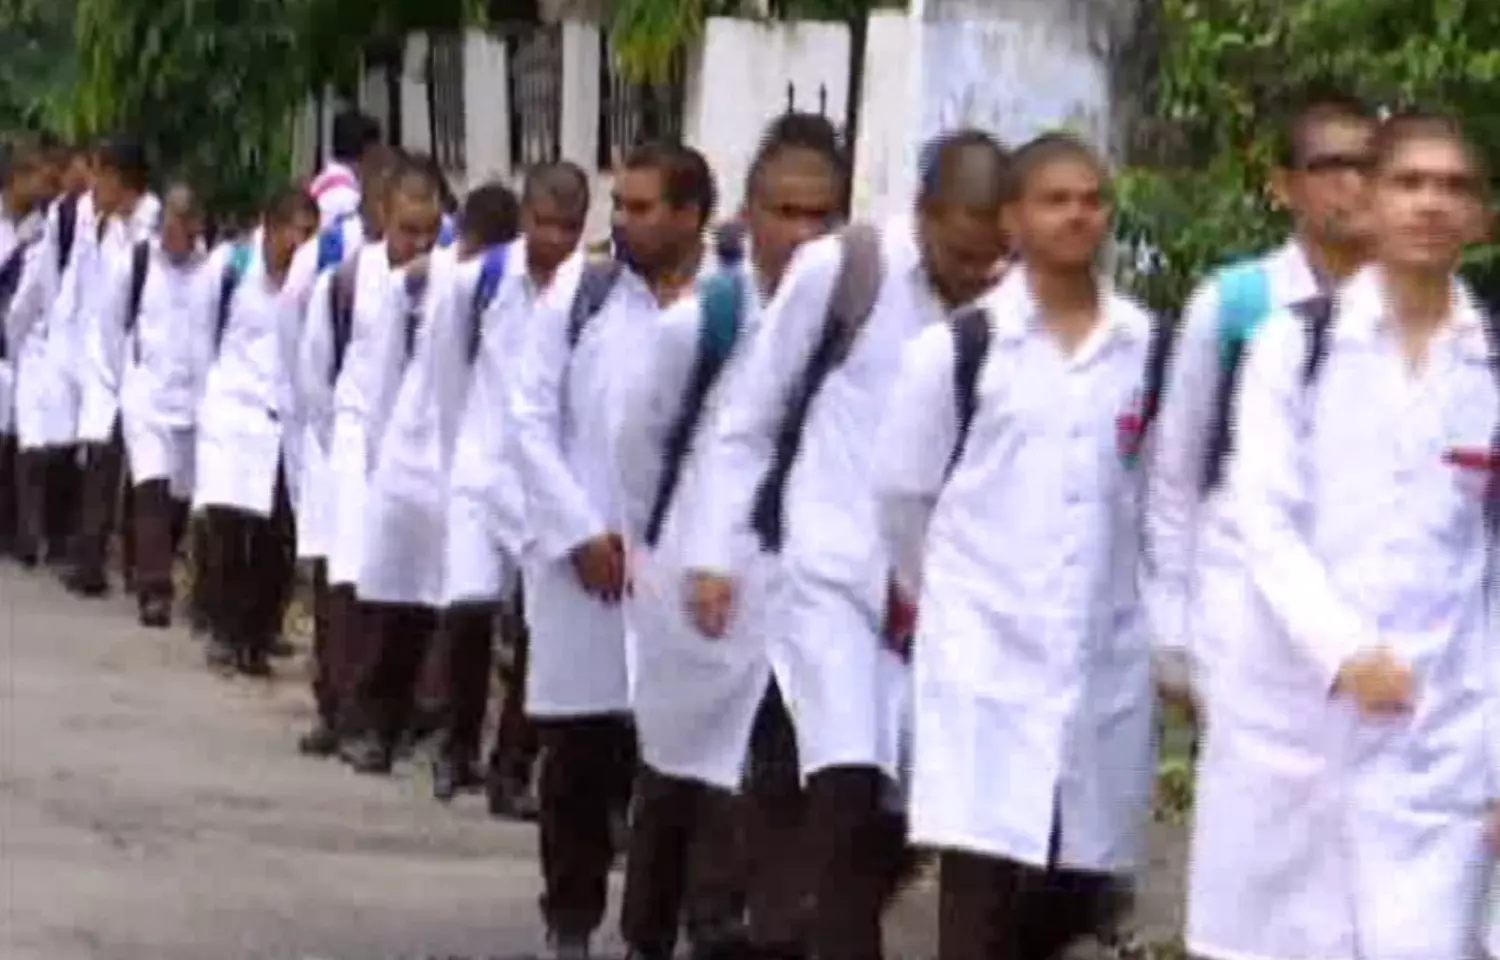 Shaven Heads, Hands tied back: Alleged Ragging video at Haldwani Medical College goes viral